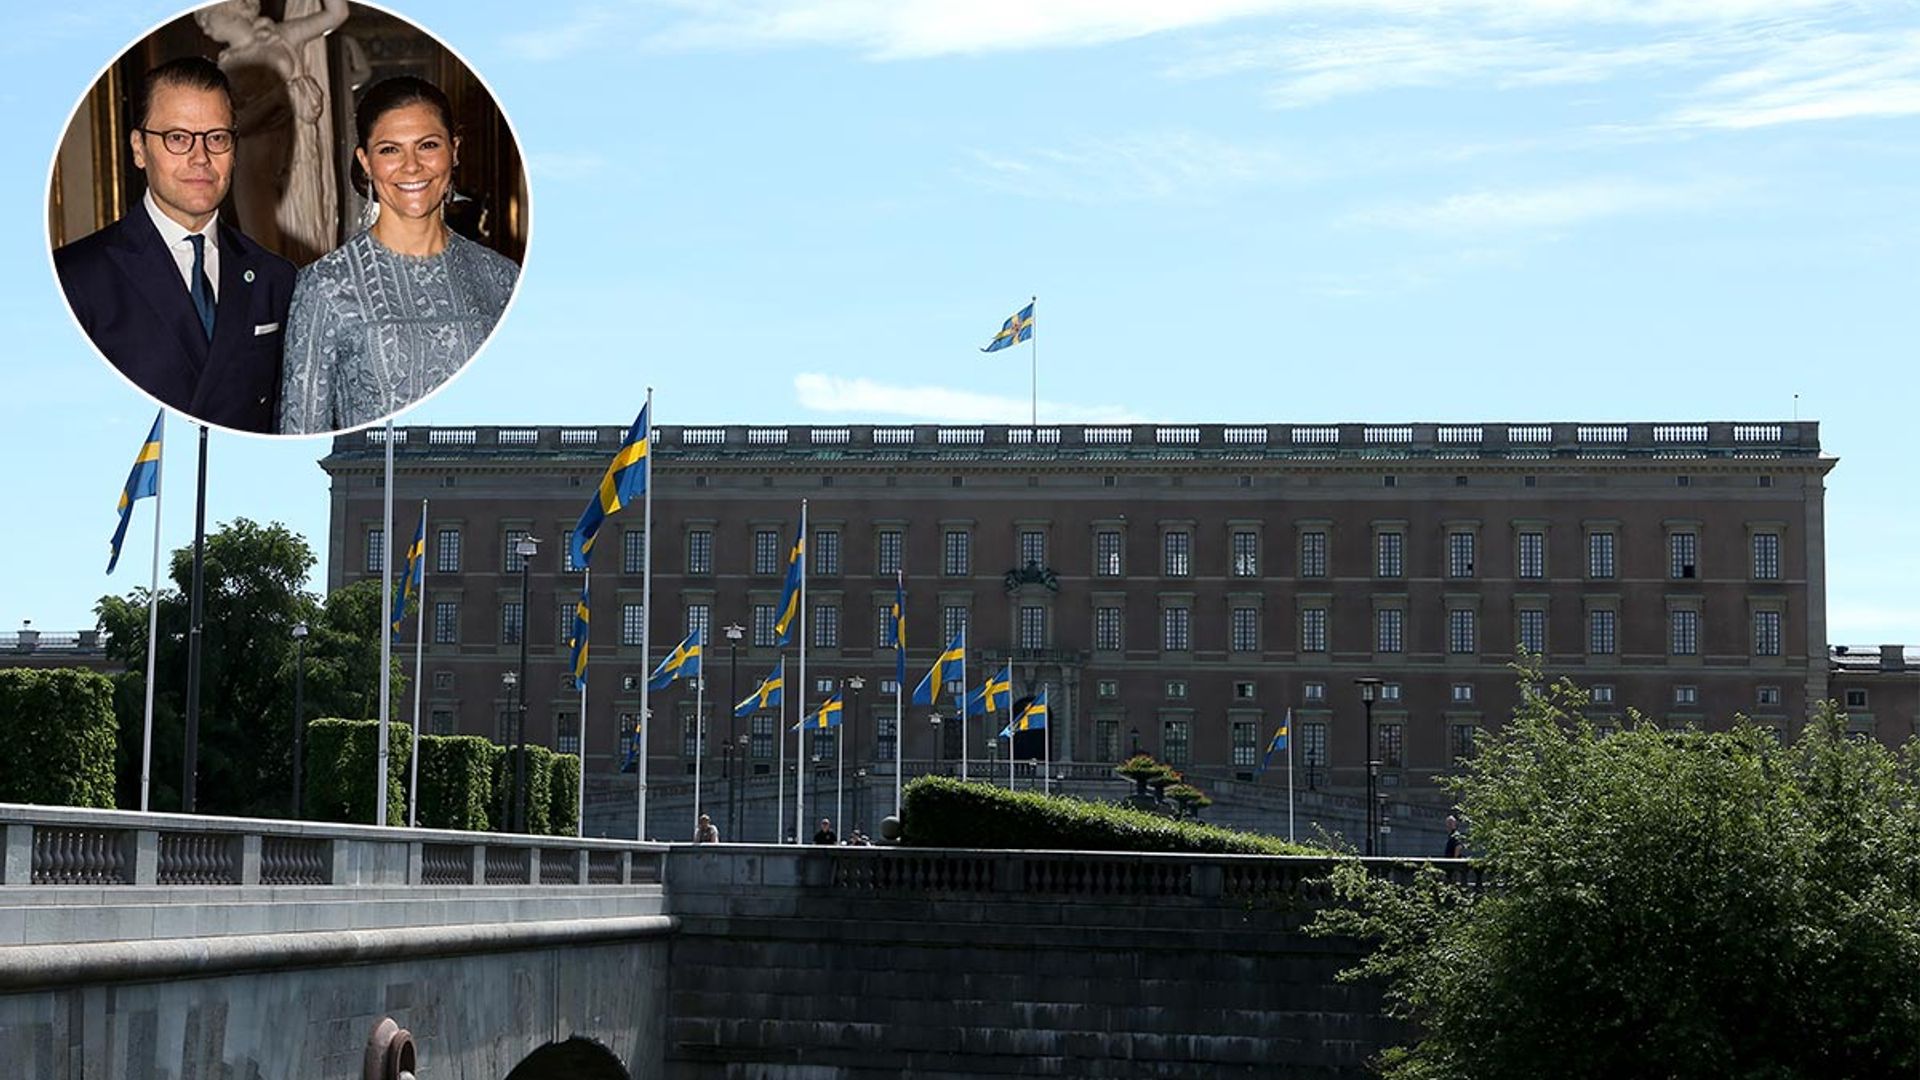 Swedish royal palace